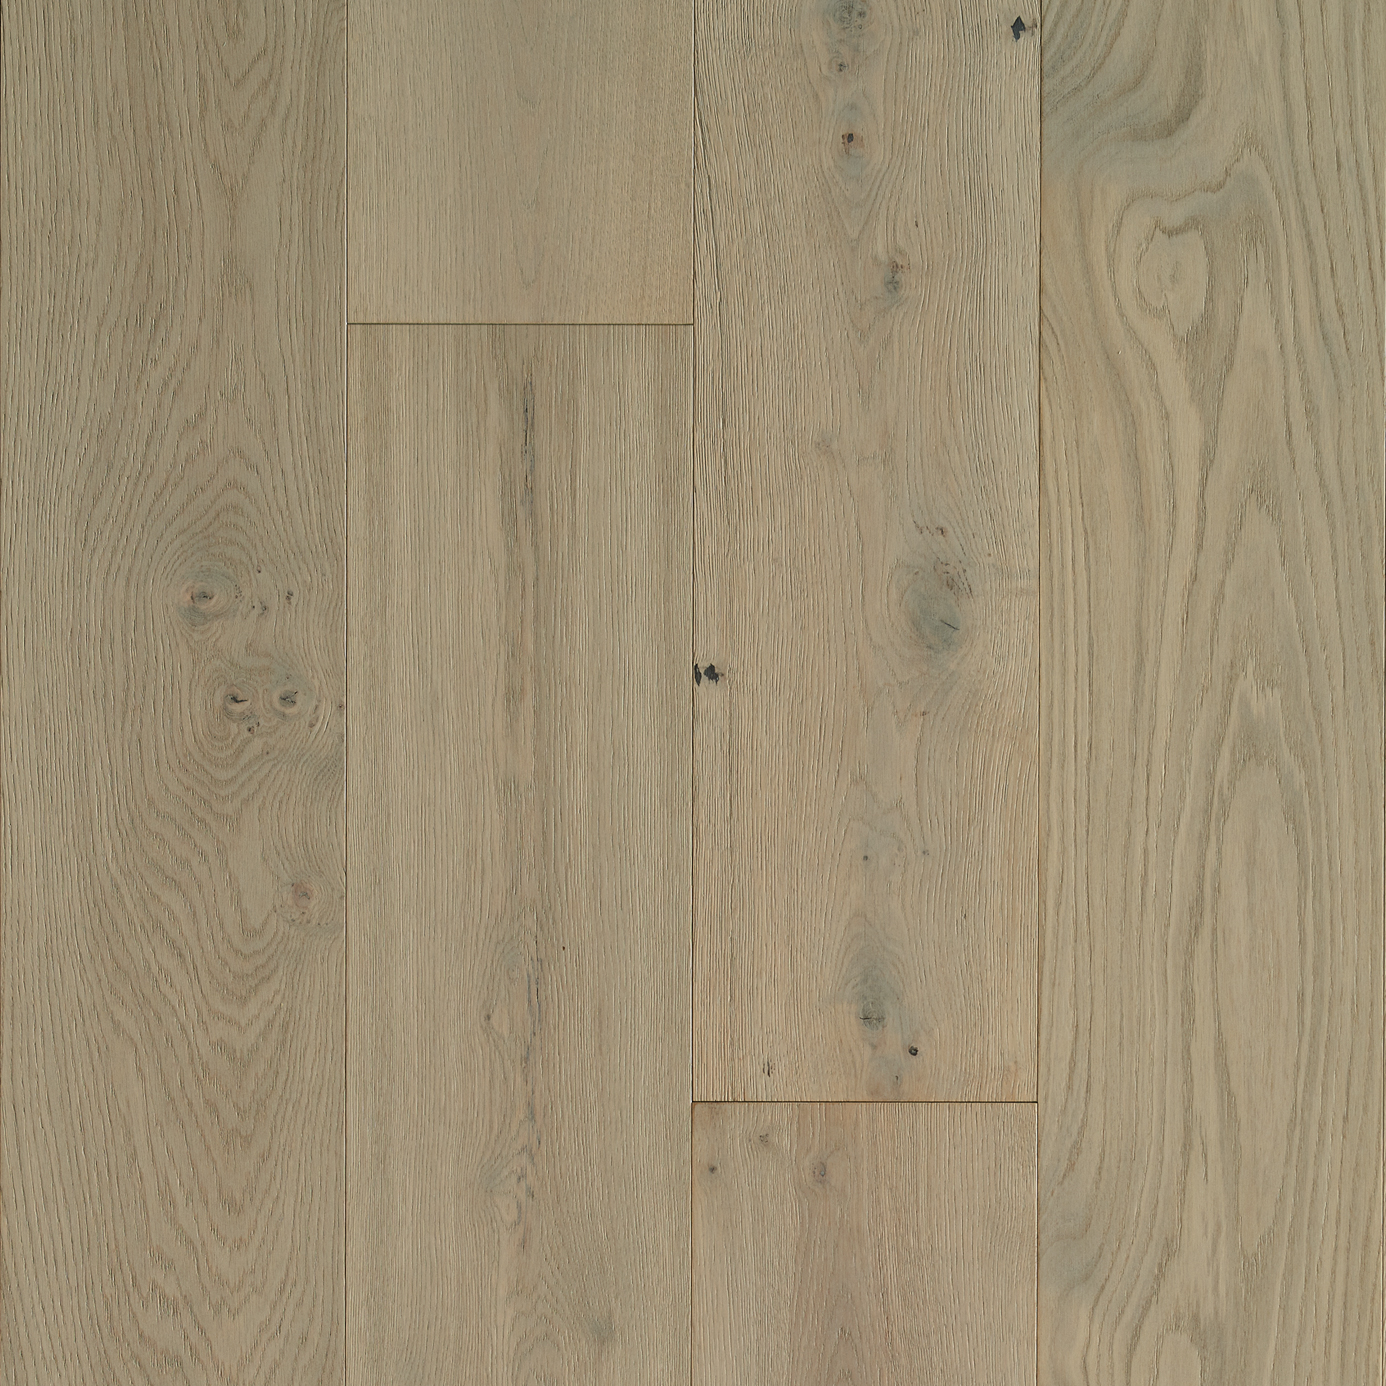 White Oak Engineered Hardwood Brbh96ek16w, Bruce Wide Plank Hardwood Flooring